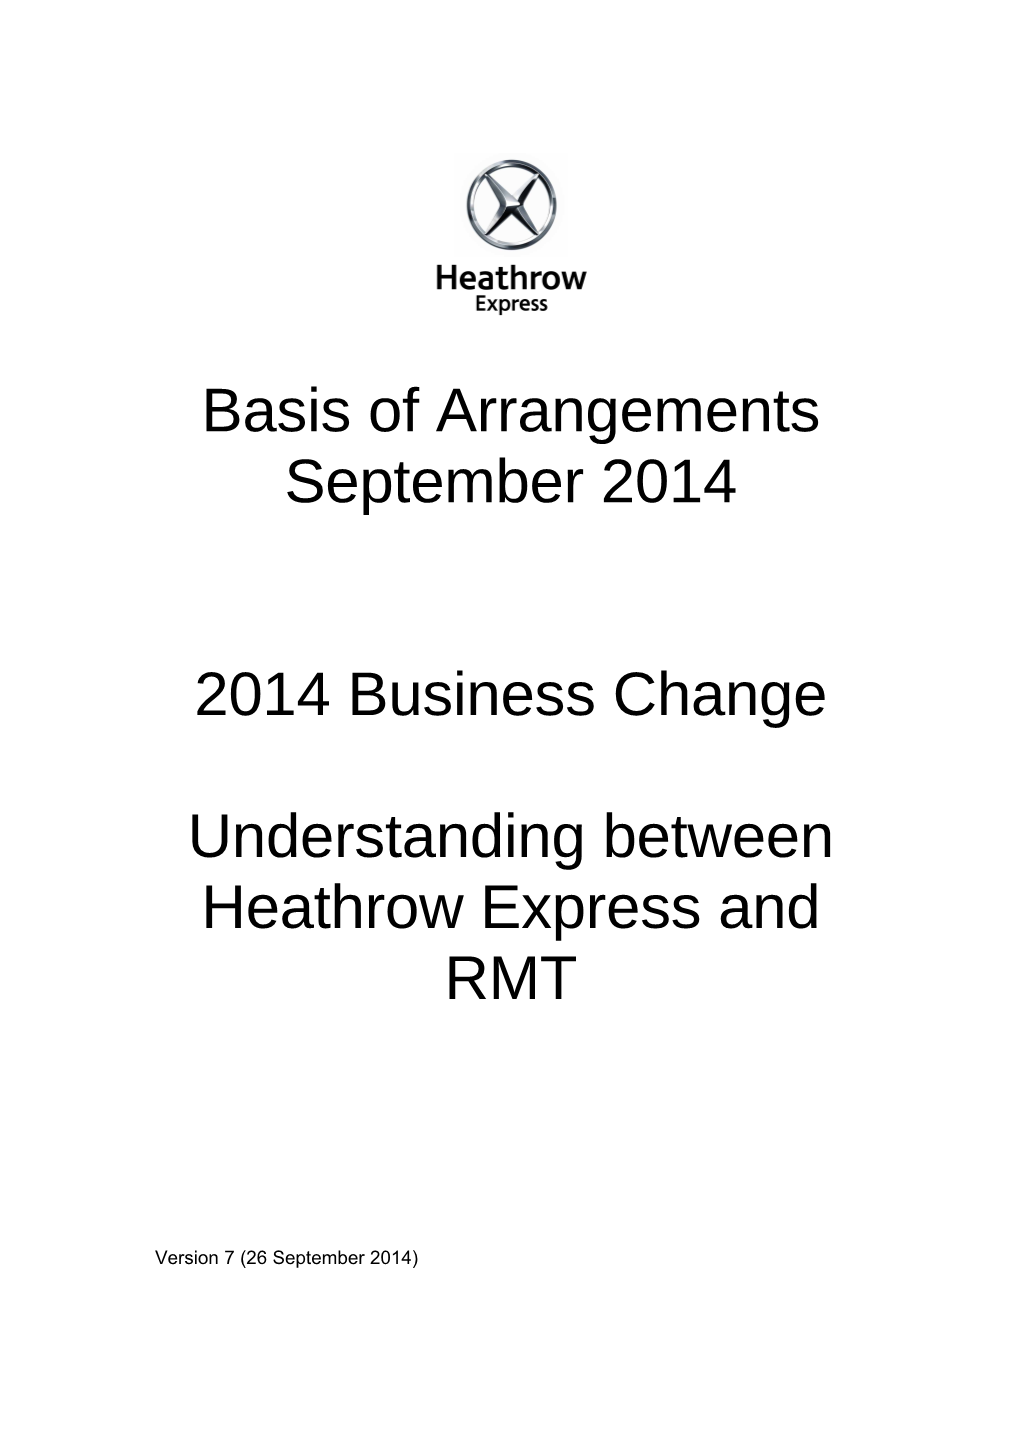 2014 Business Change